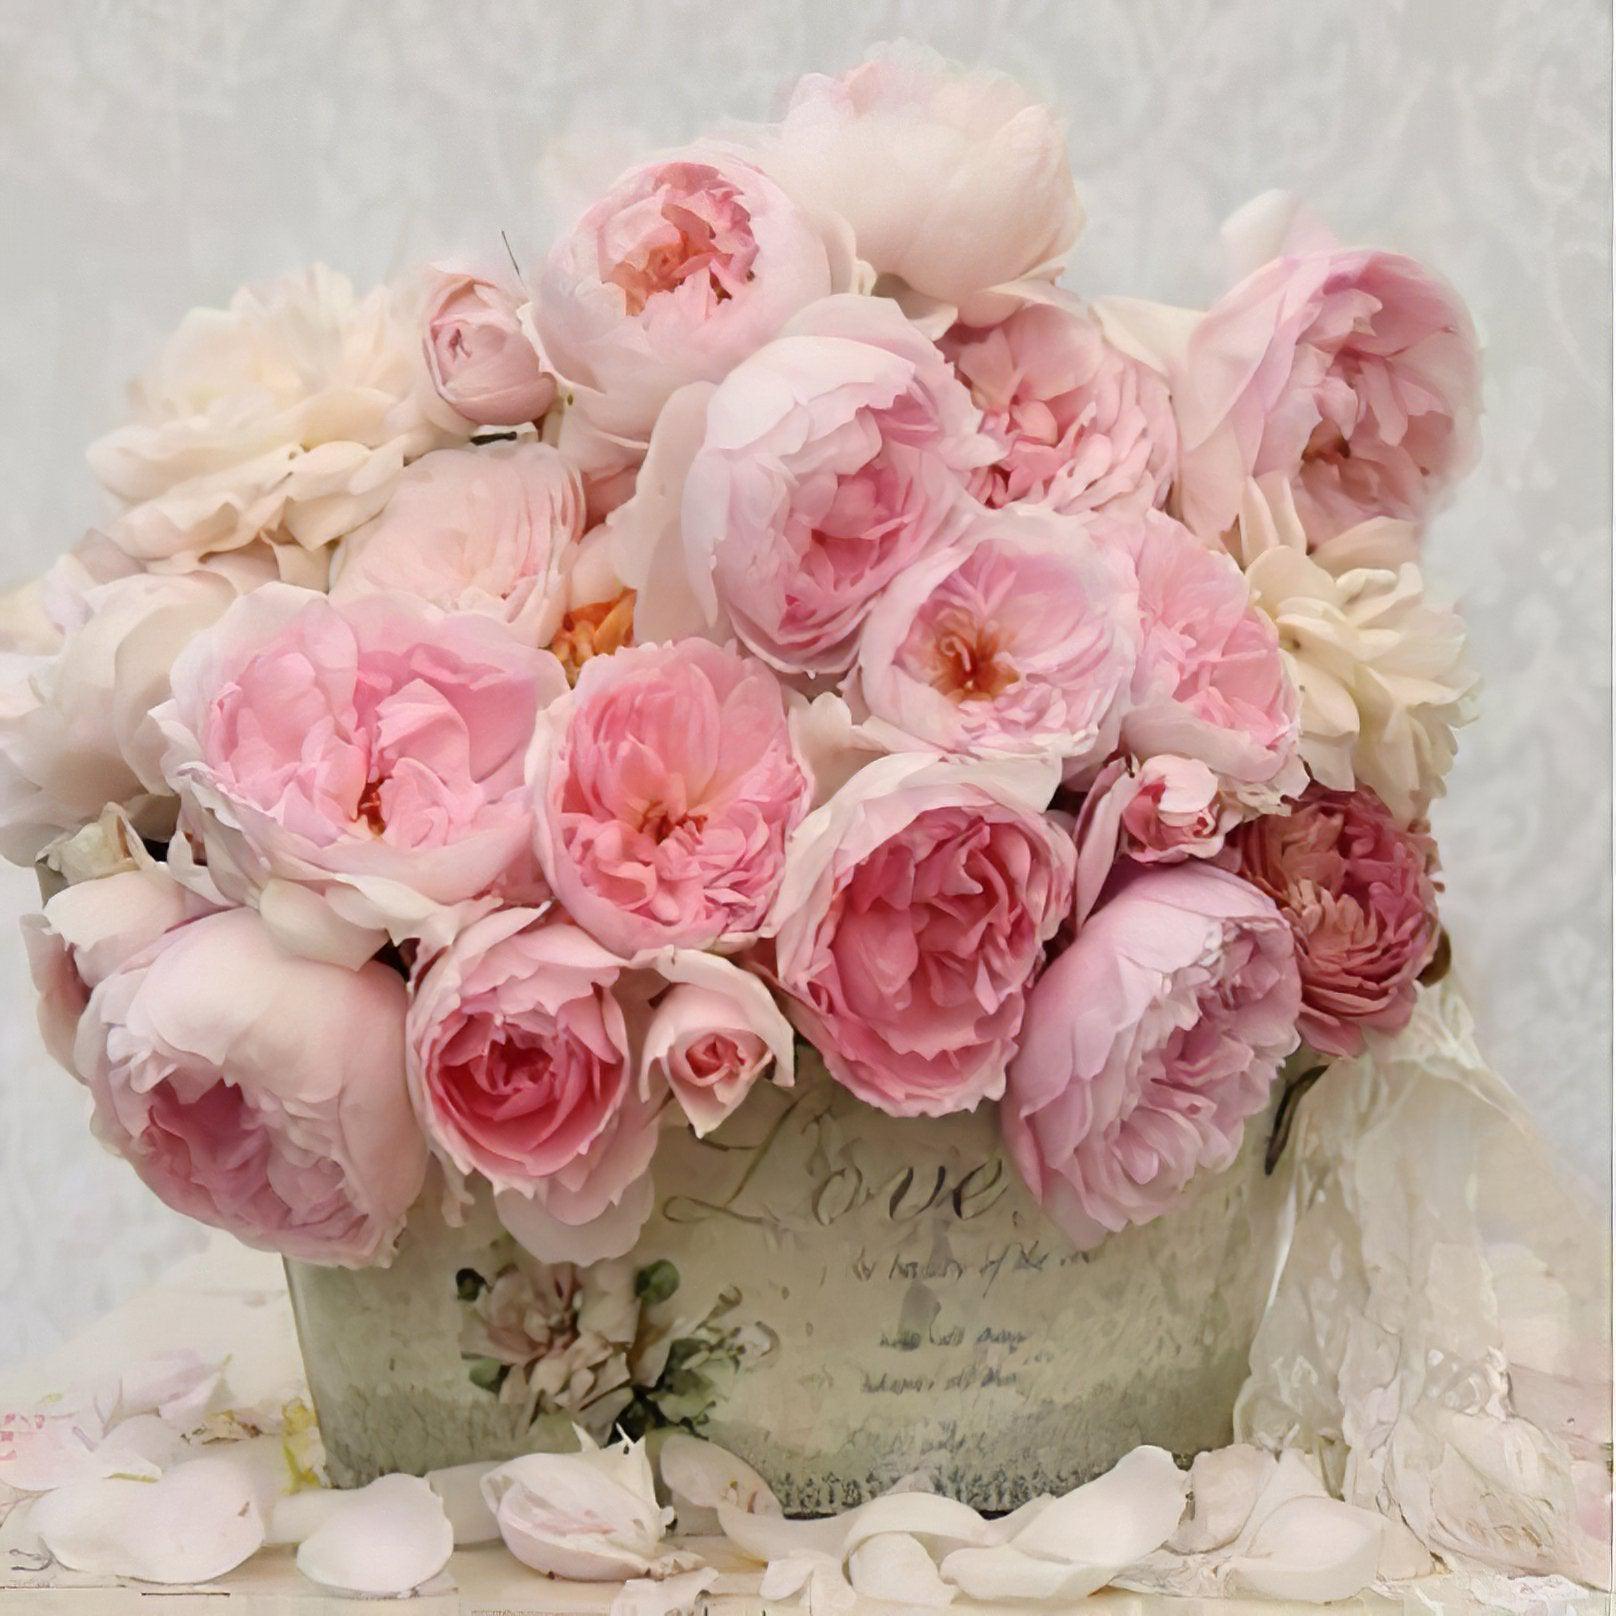 Amazing Bouquet of Roses: Blossoming beauty and romance. #Diamondartlove